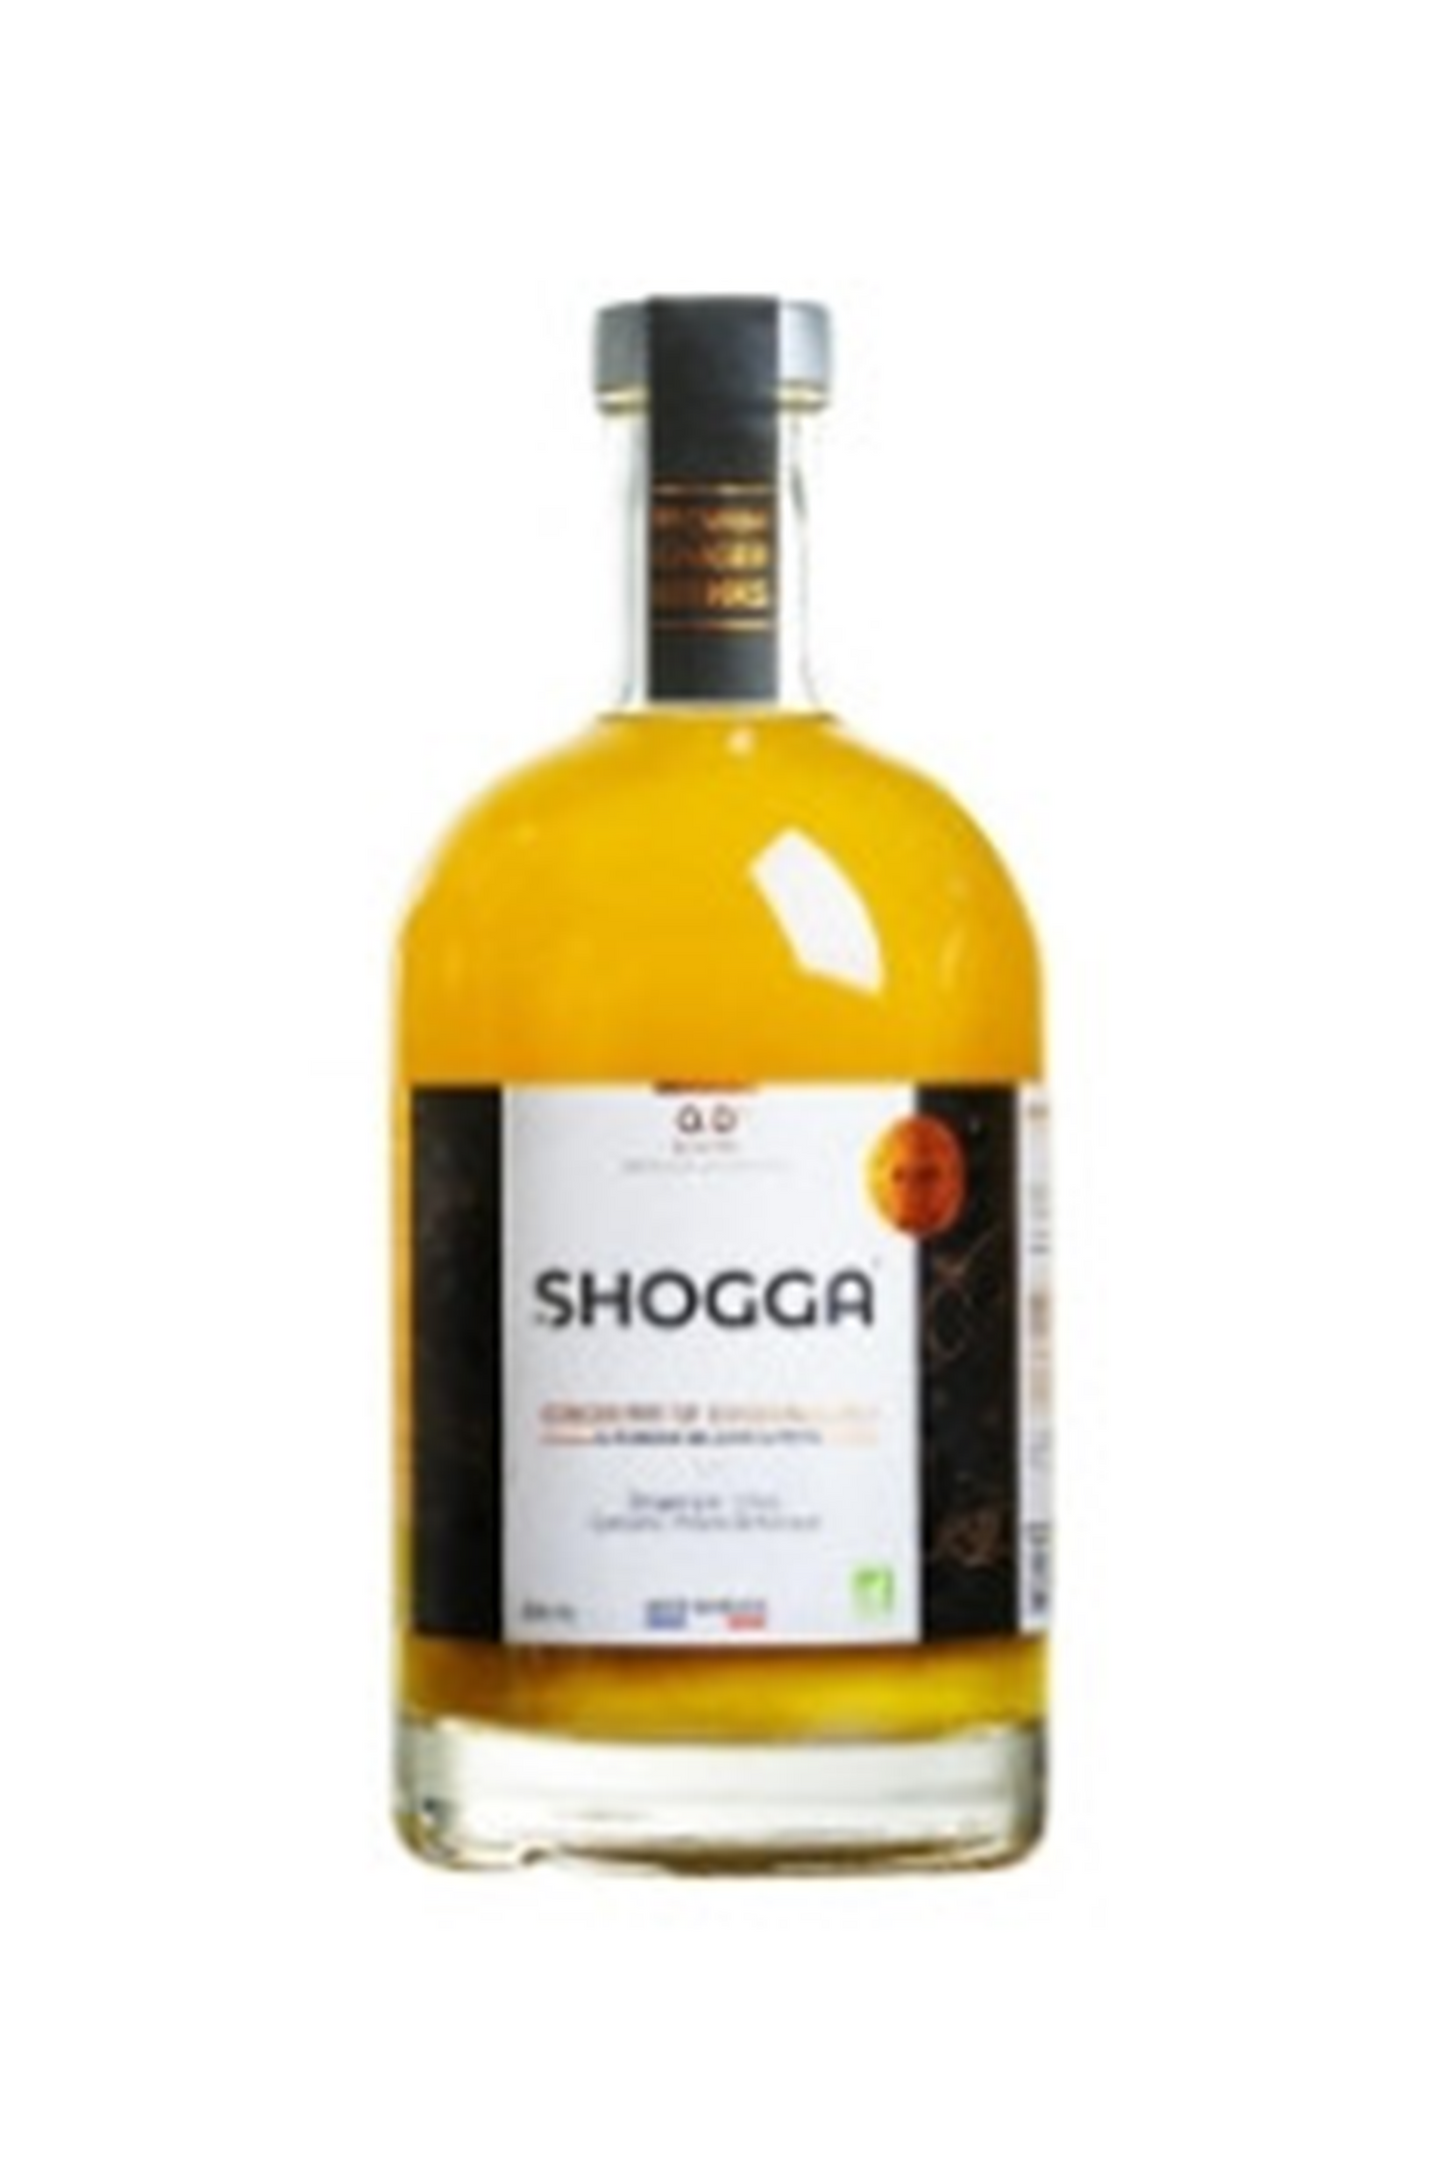 SHOGGA - Boisson au gingembre premium bio (200ml)